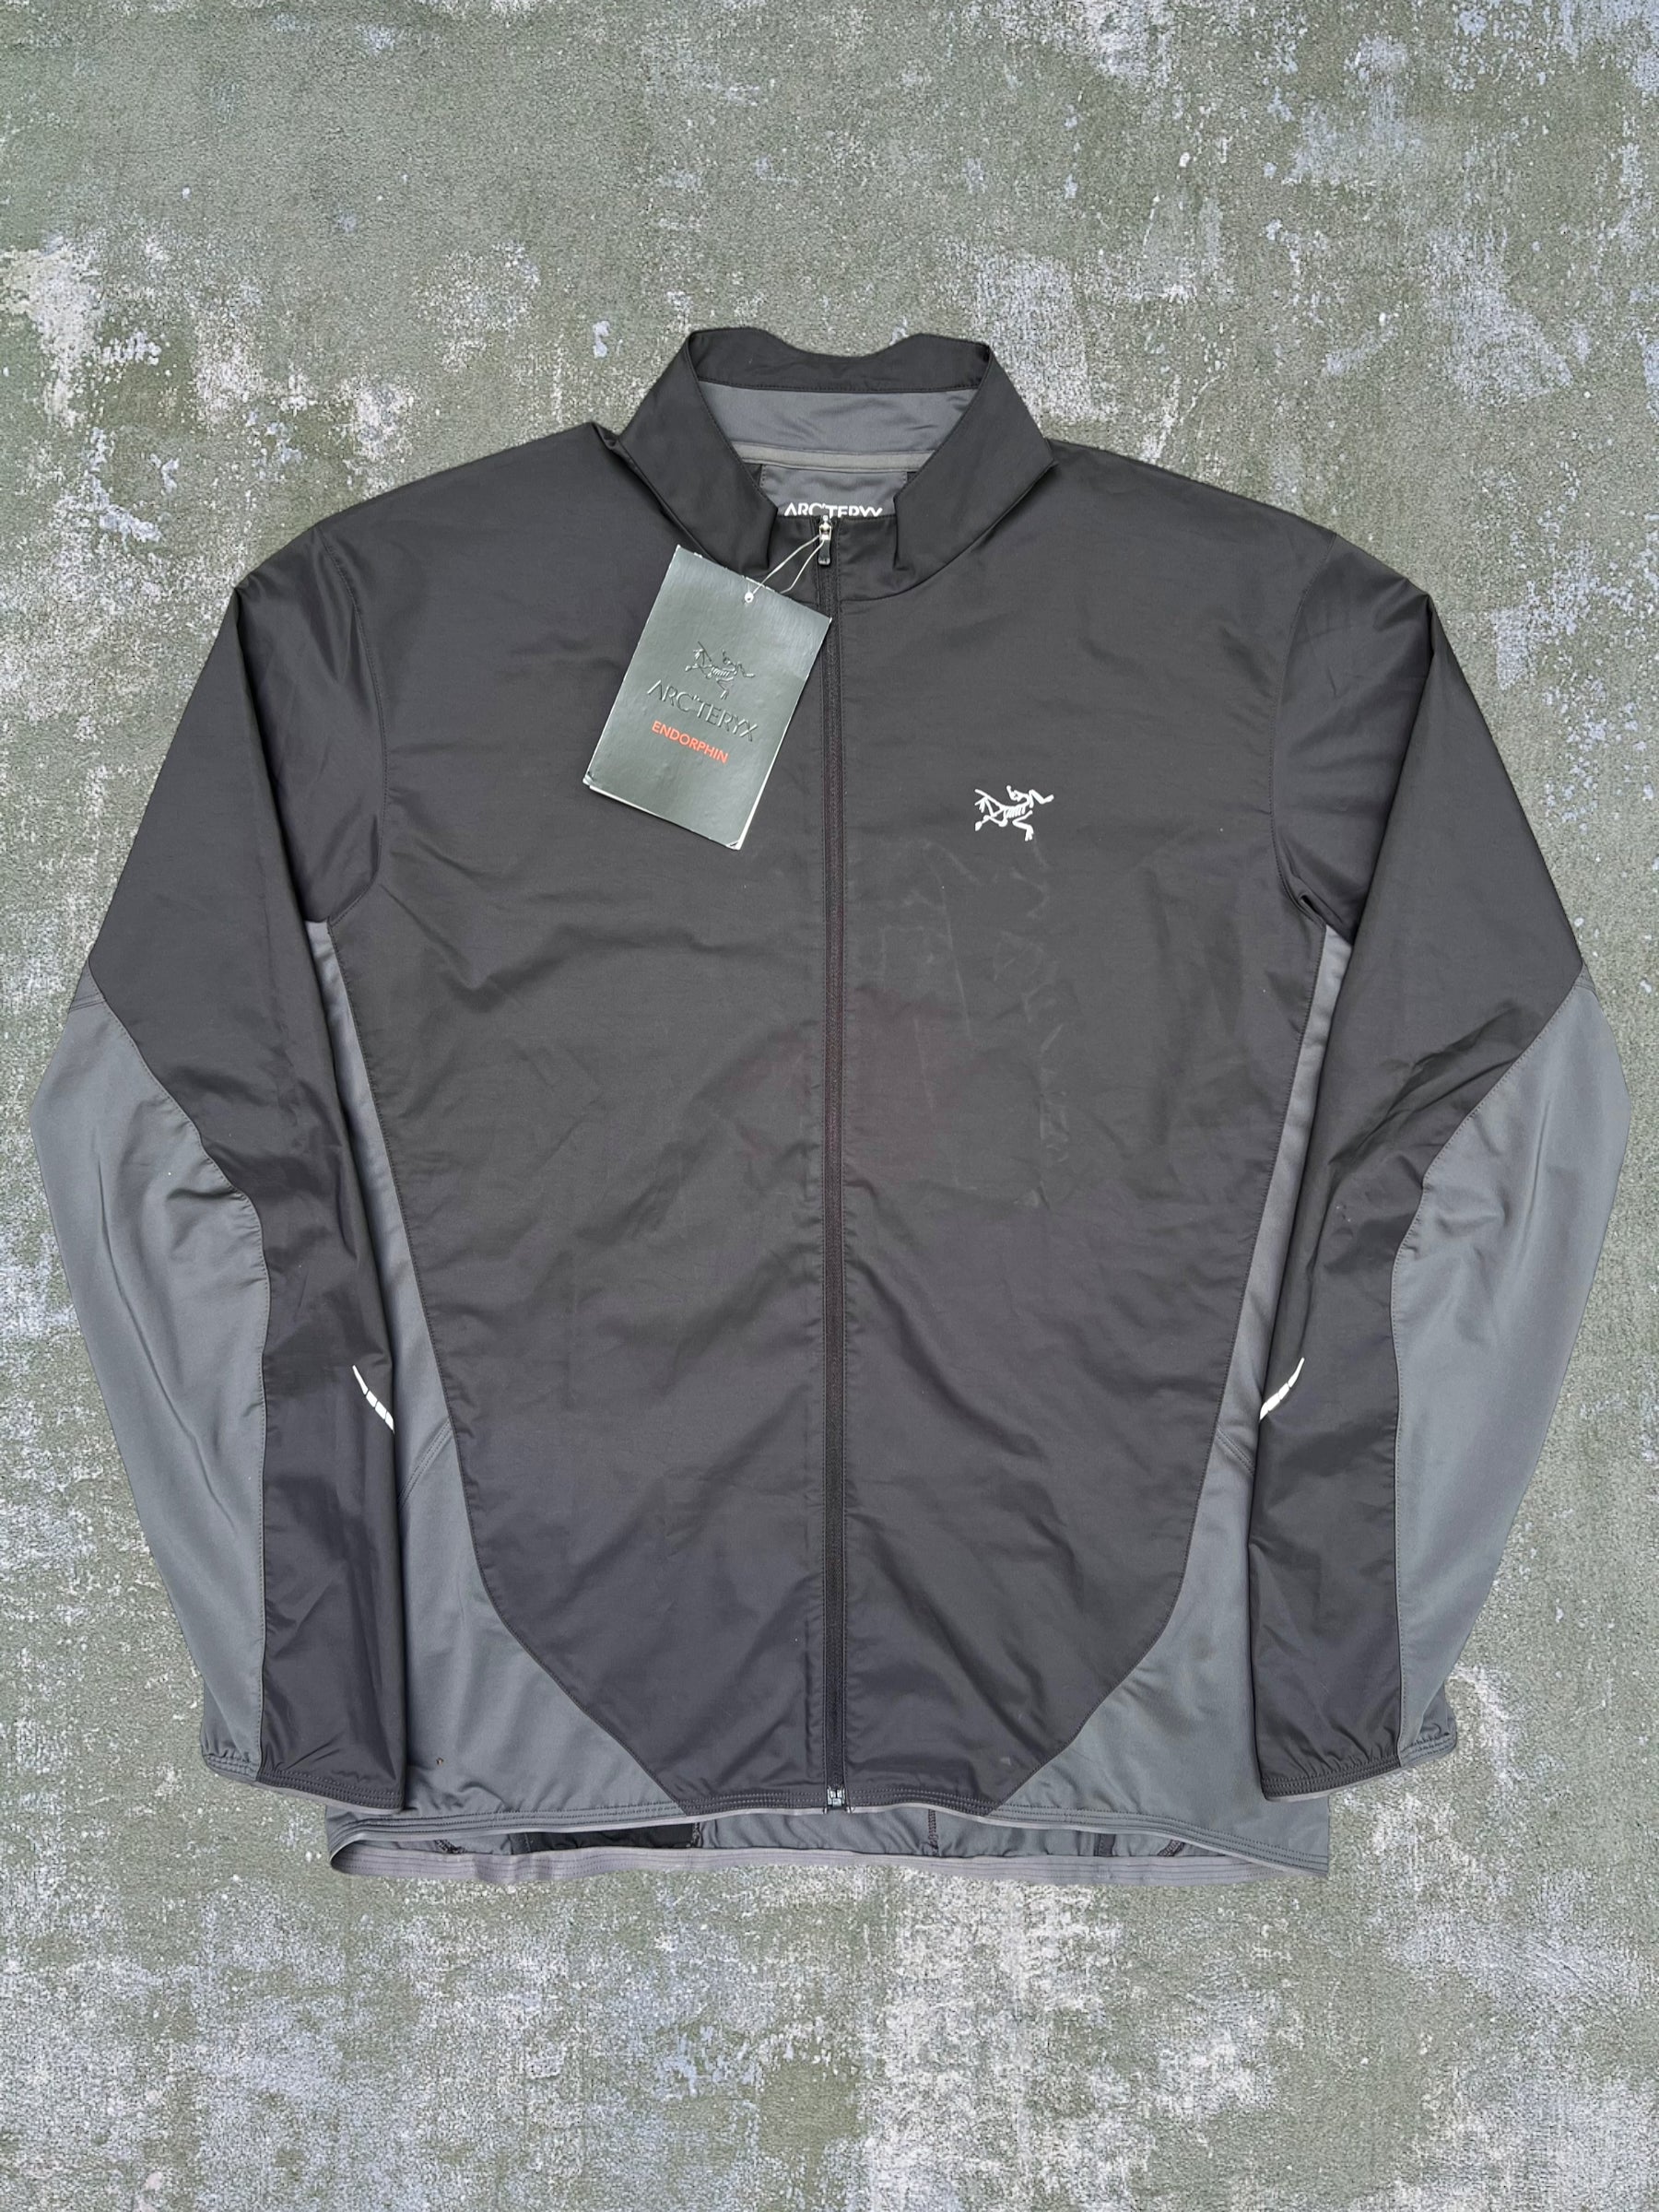 2013 Arc’teryx Darter Jacket (XL) (New With Tags)